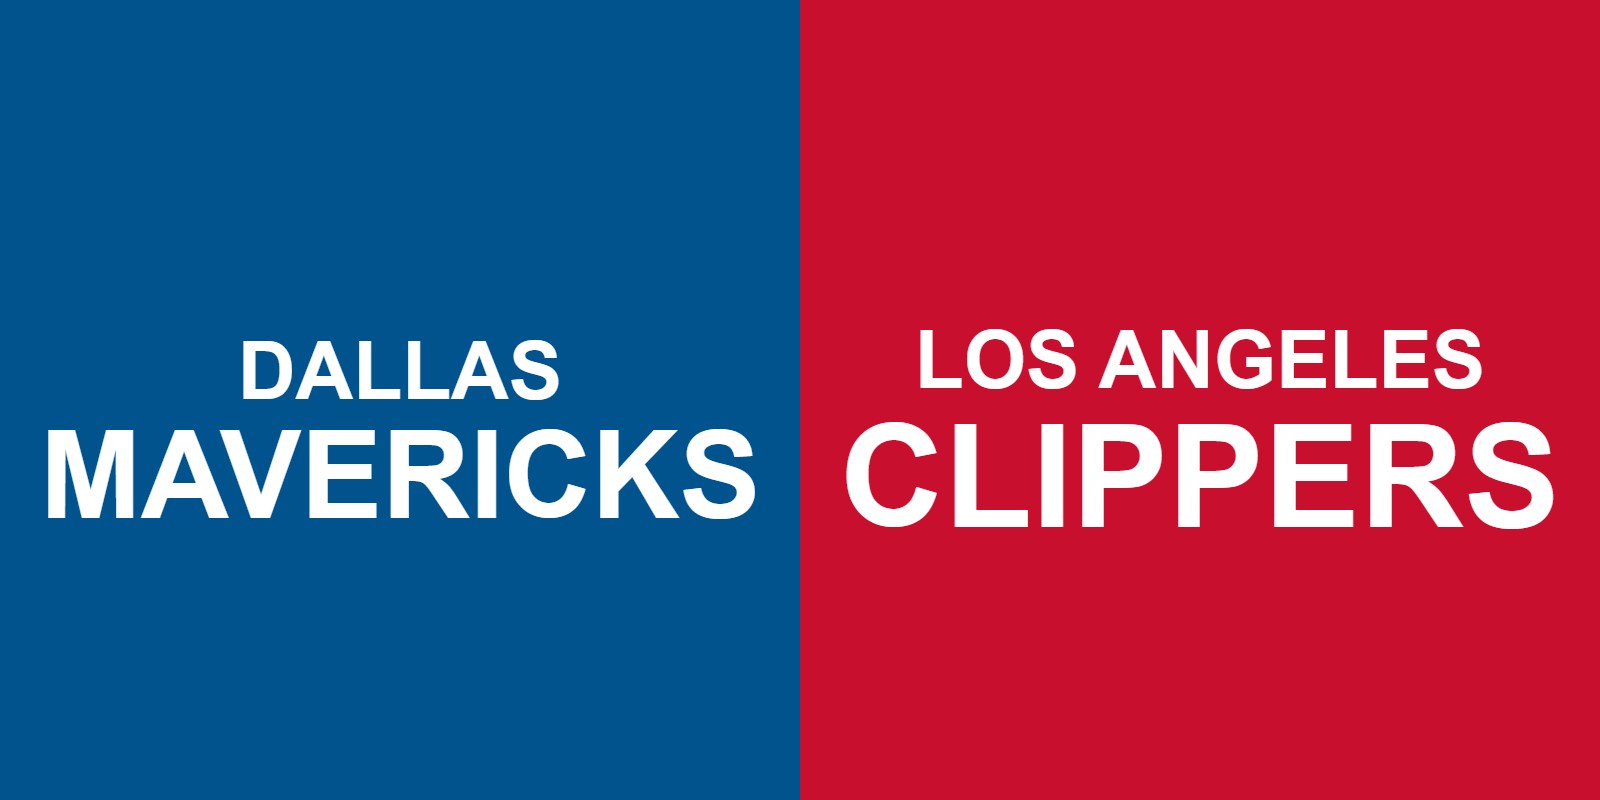 Mavericks vs Clippers